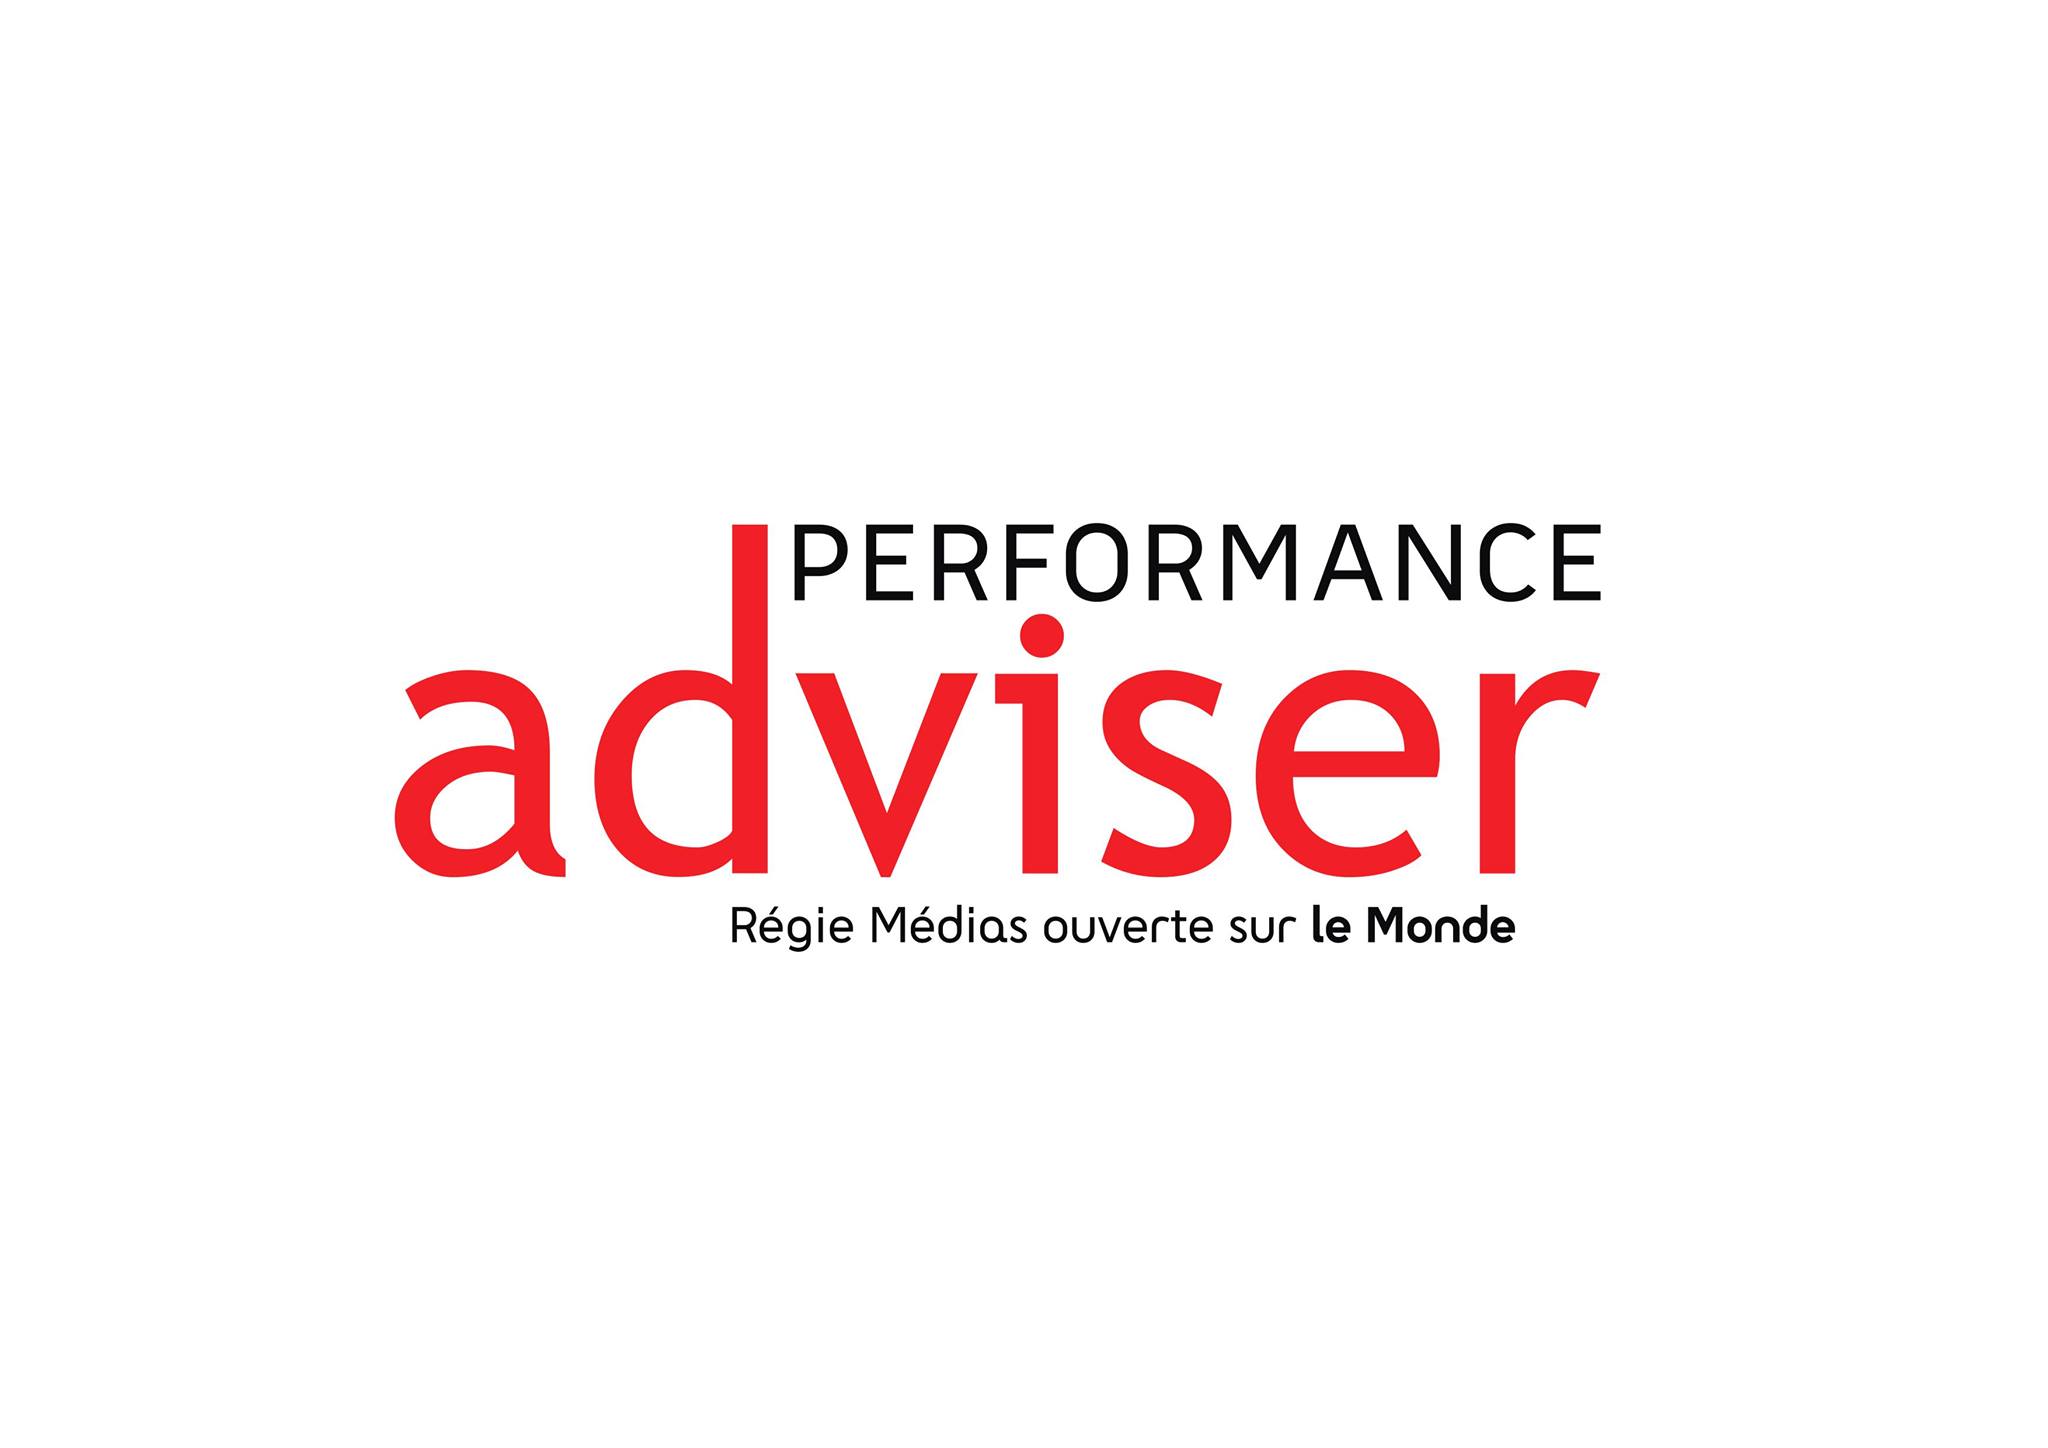 Performance Adviser